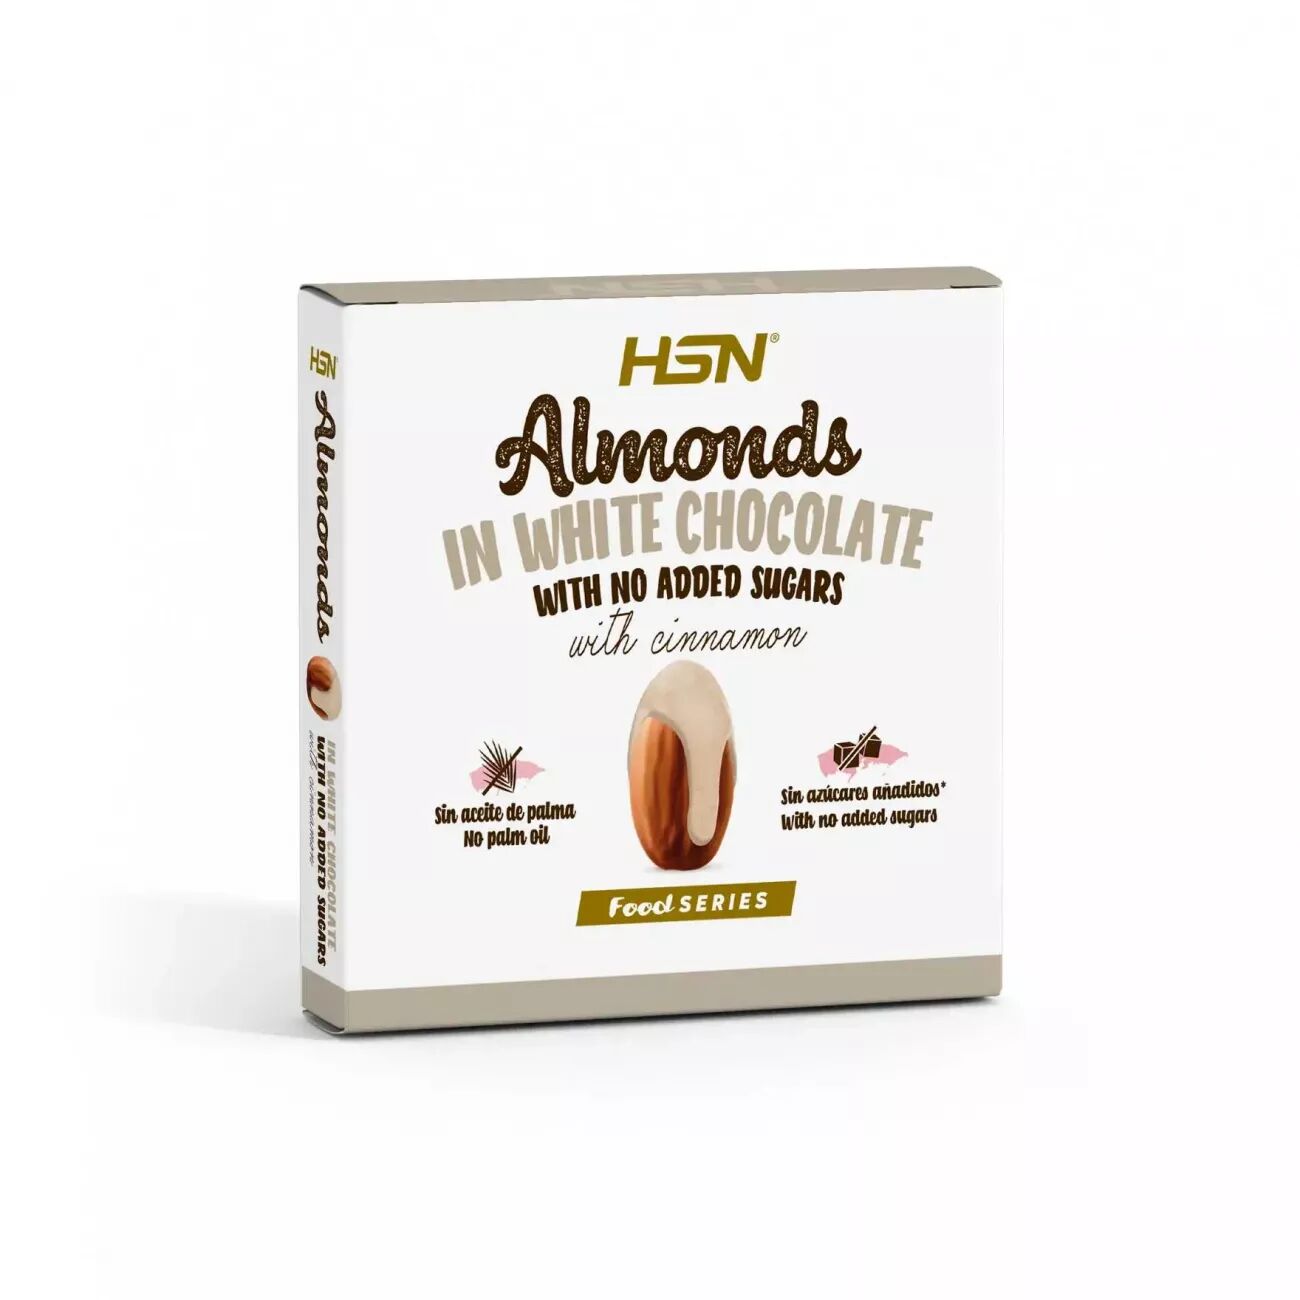 HSN Almendras con chocolate blanco sin azúcar - 70g